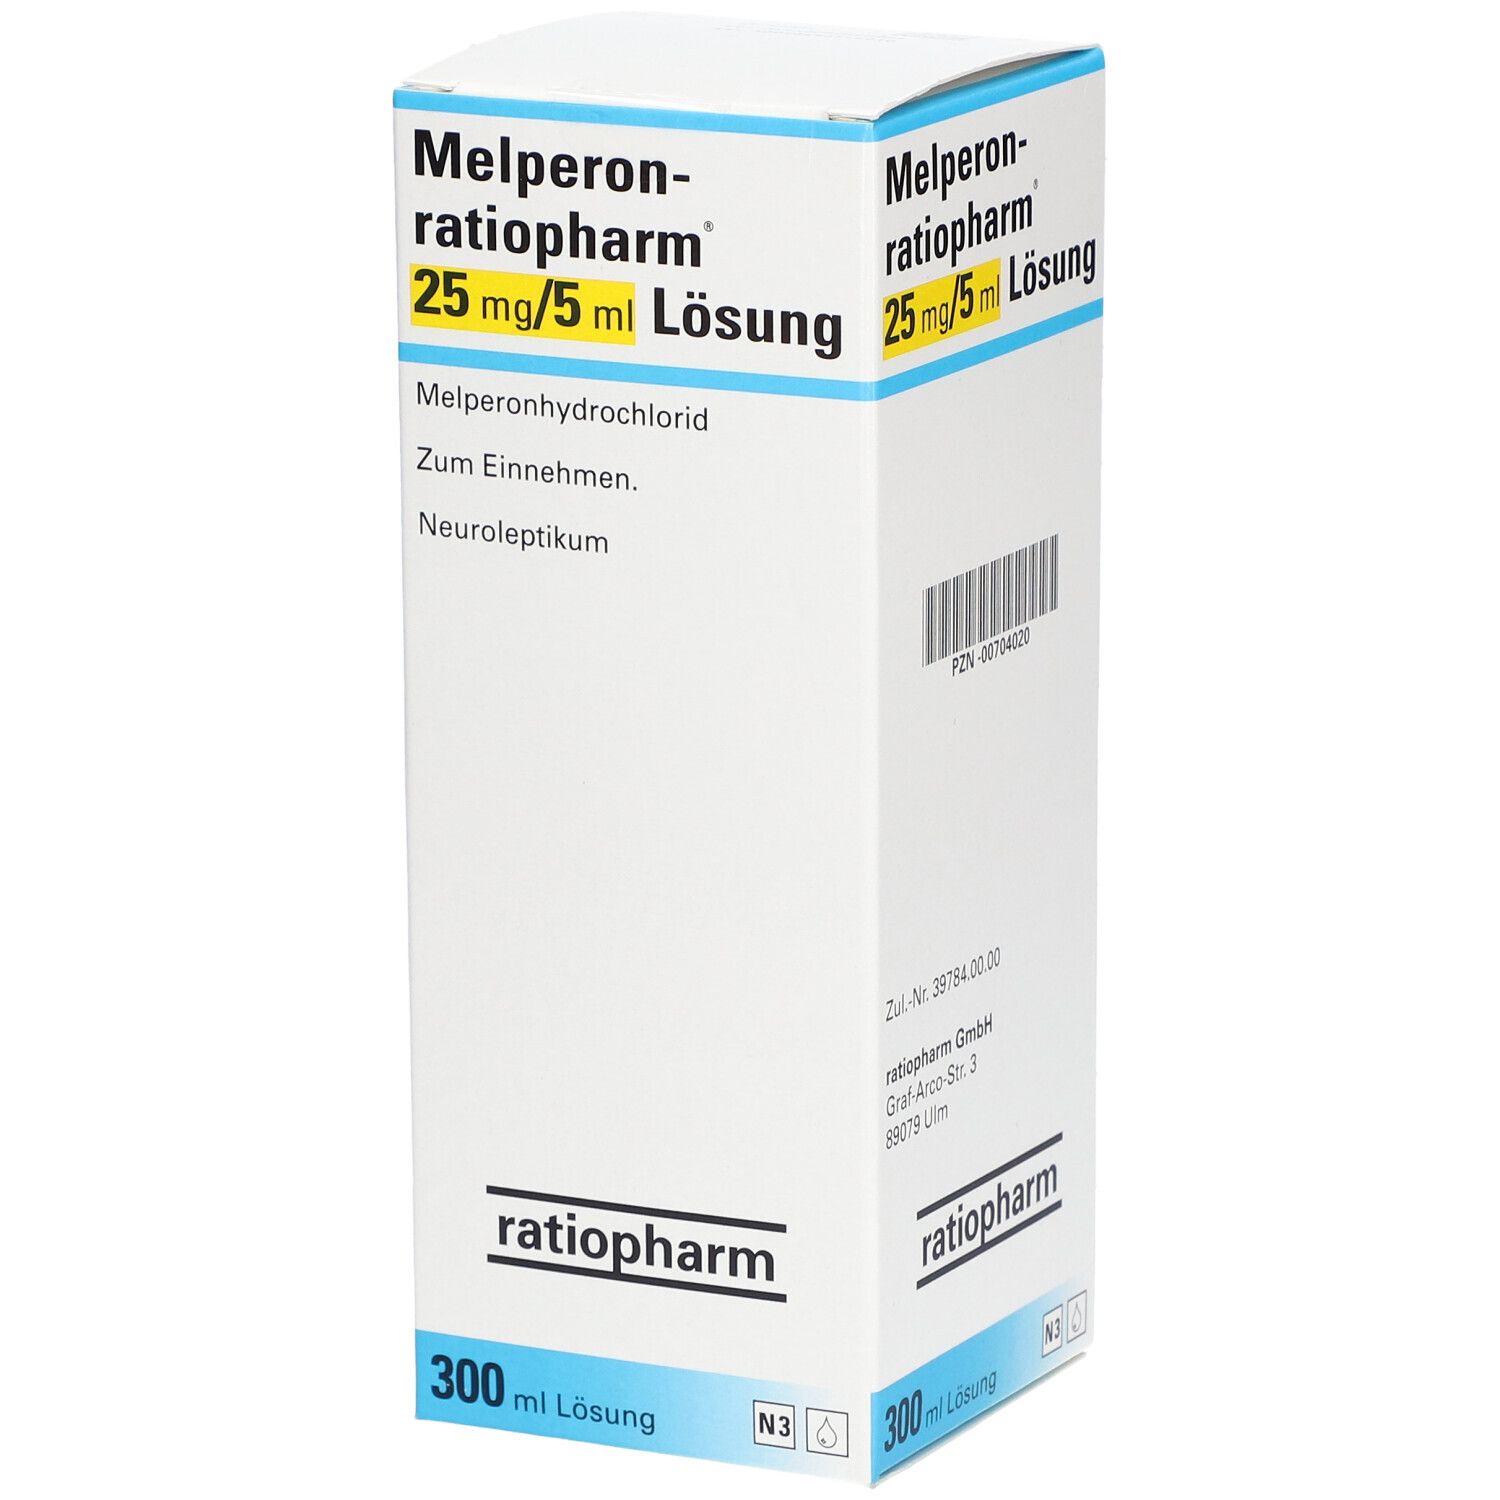 Melperon-ratiopharm® 25 mg/5 ml